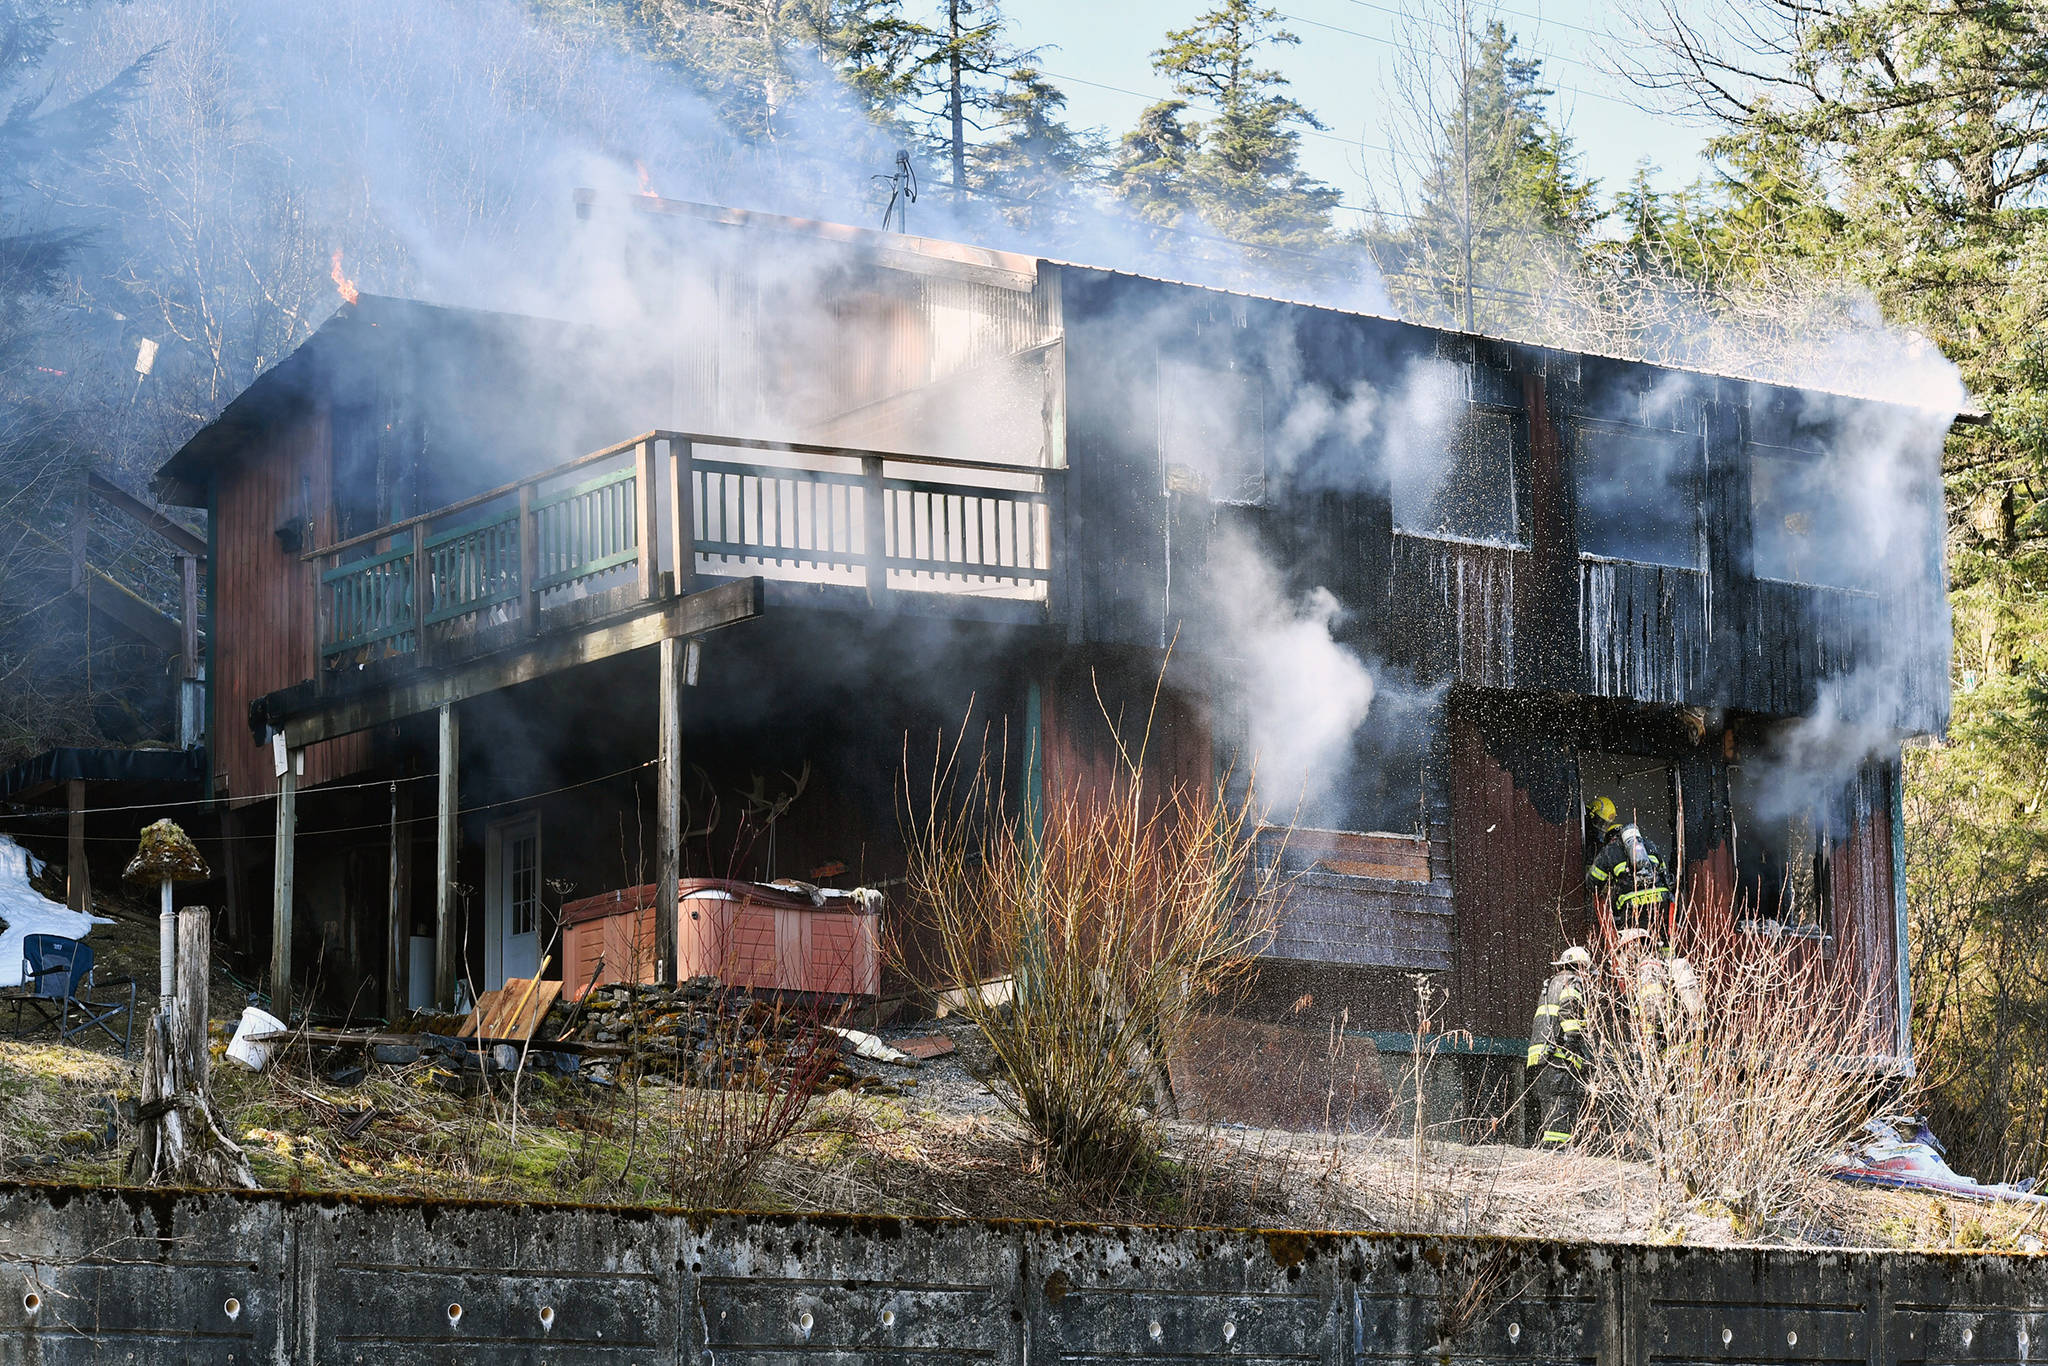 Hours after blaze, Douglas home catches fire again